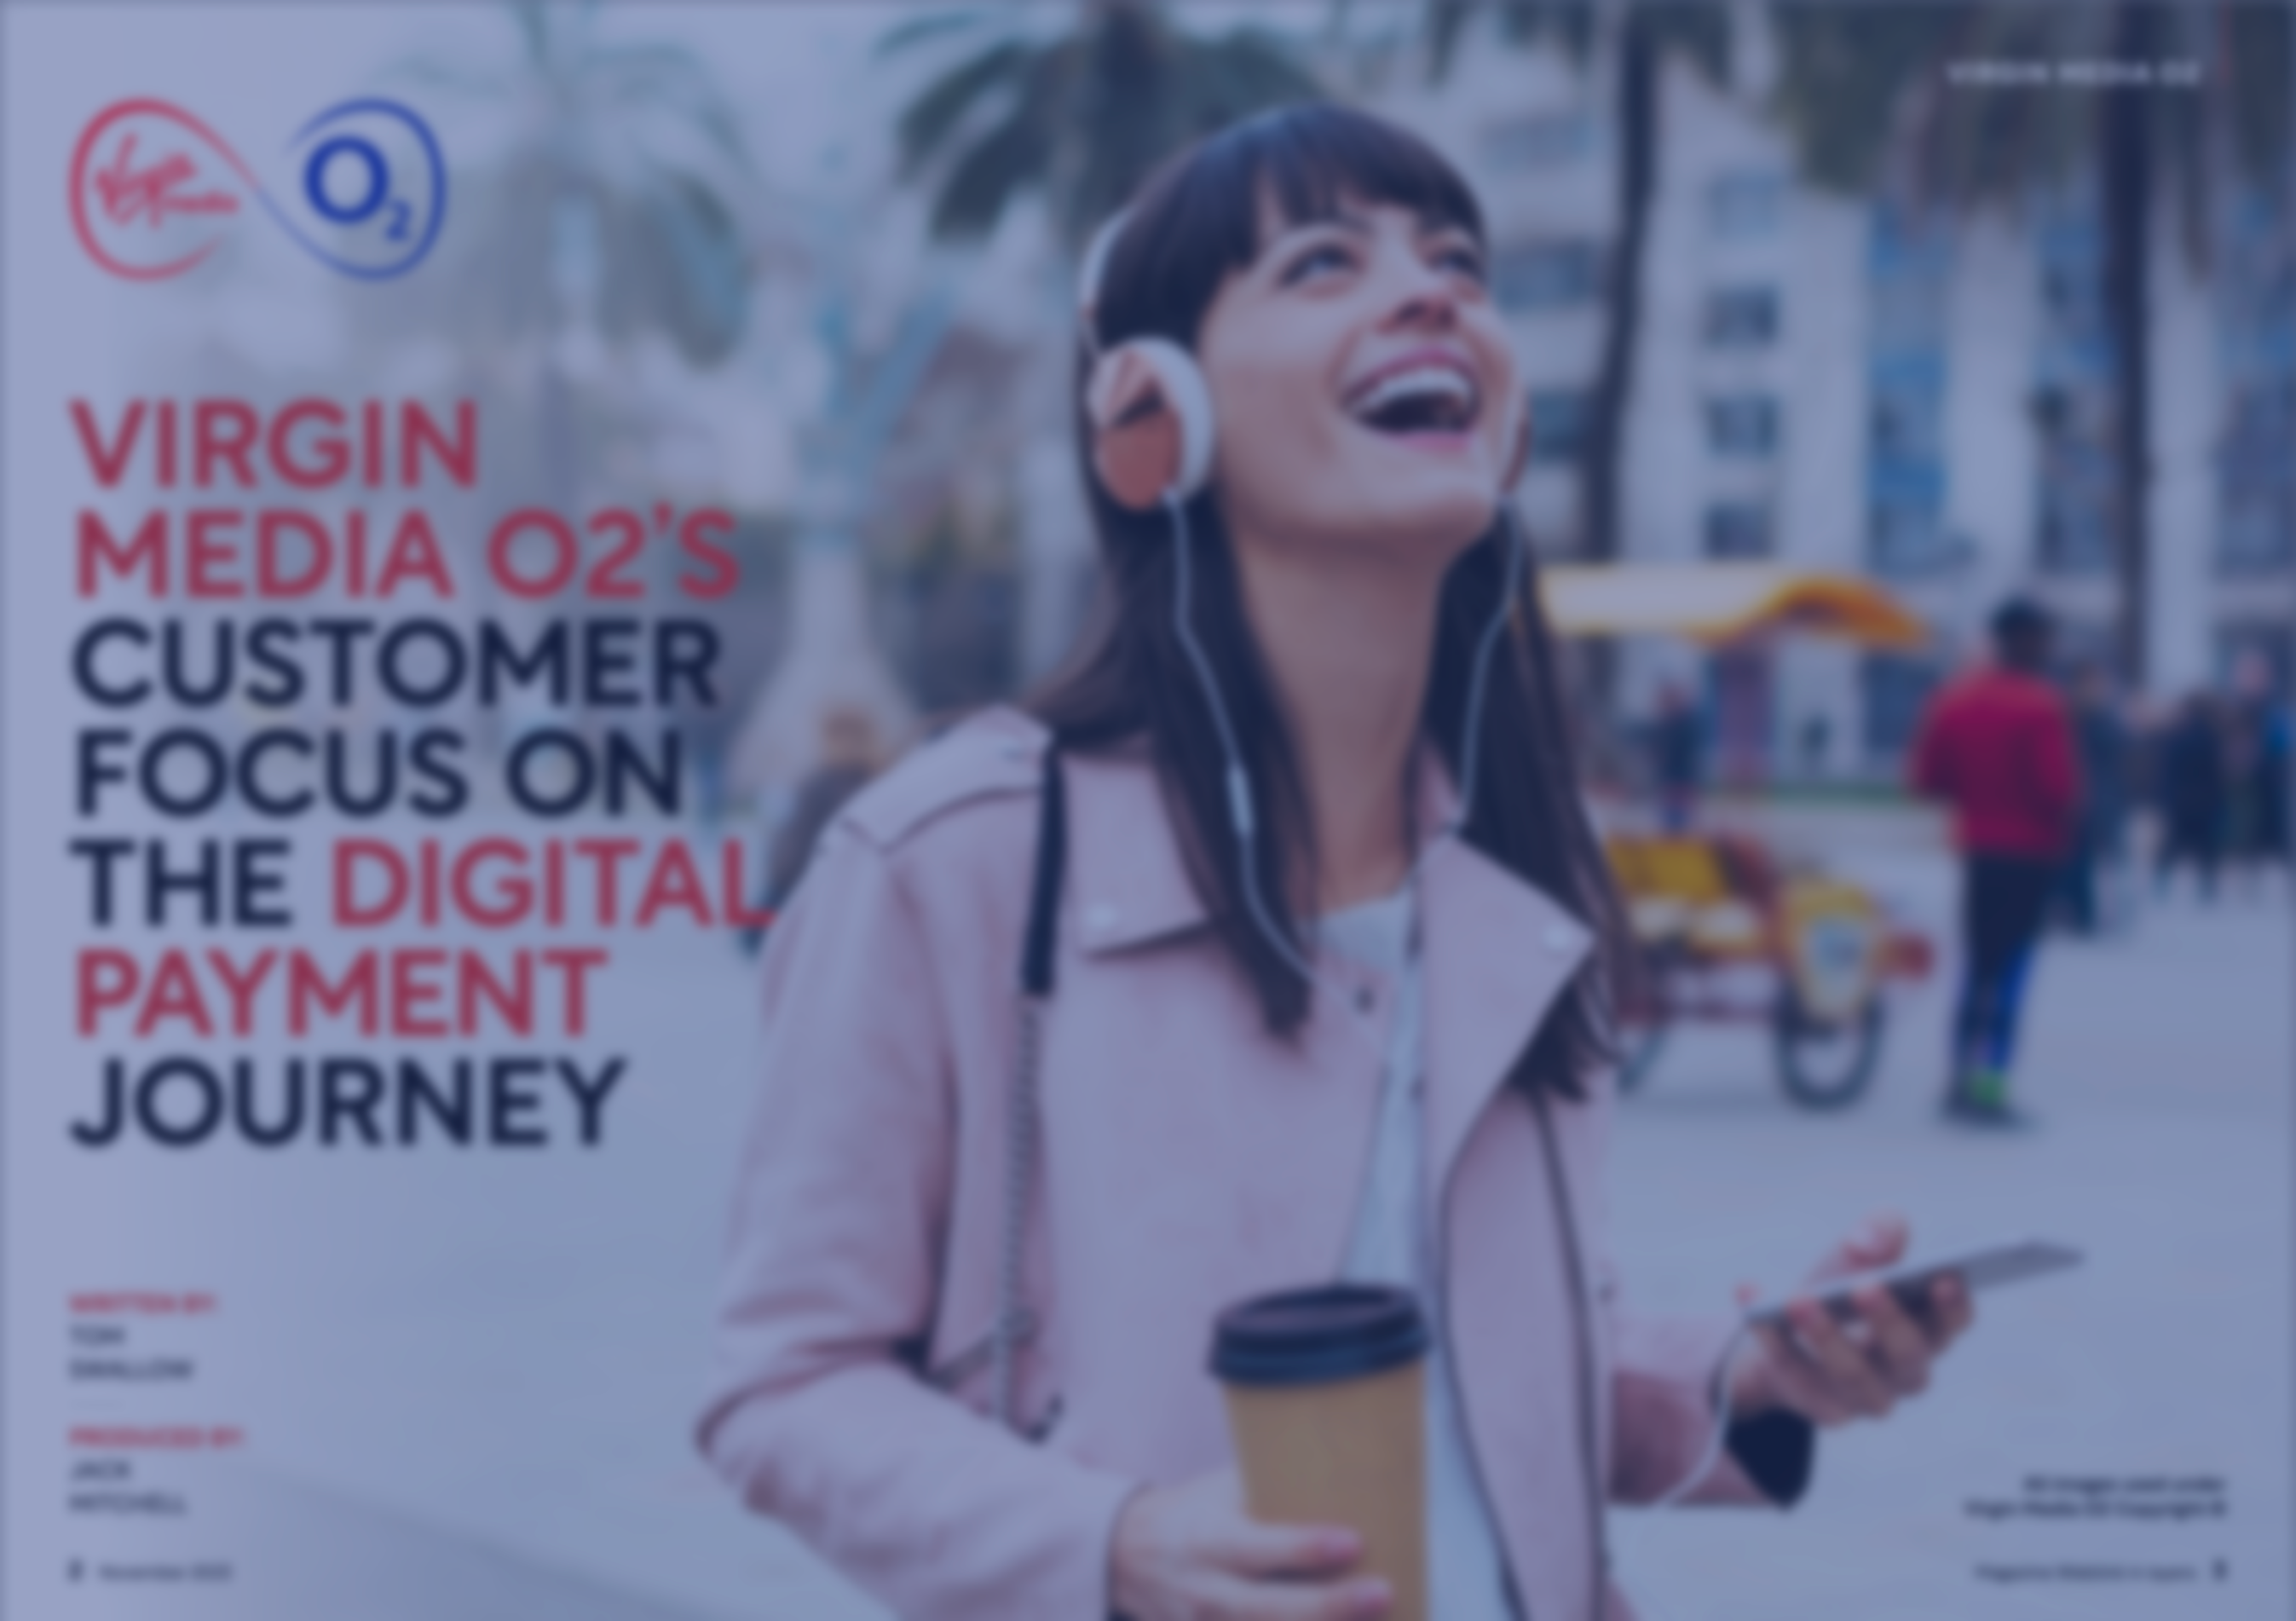 Virgin Media O2's customer focus on the digital payment journey